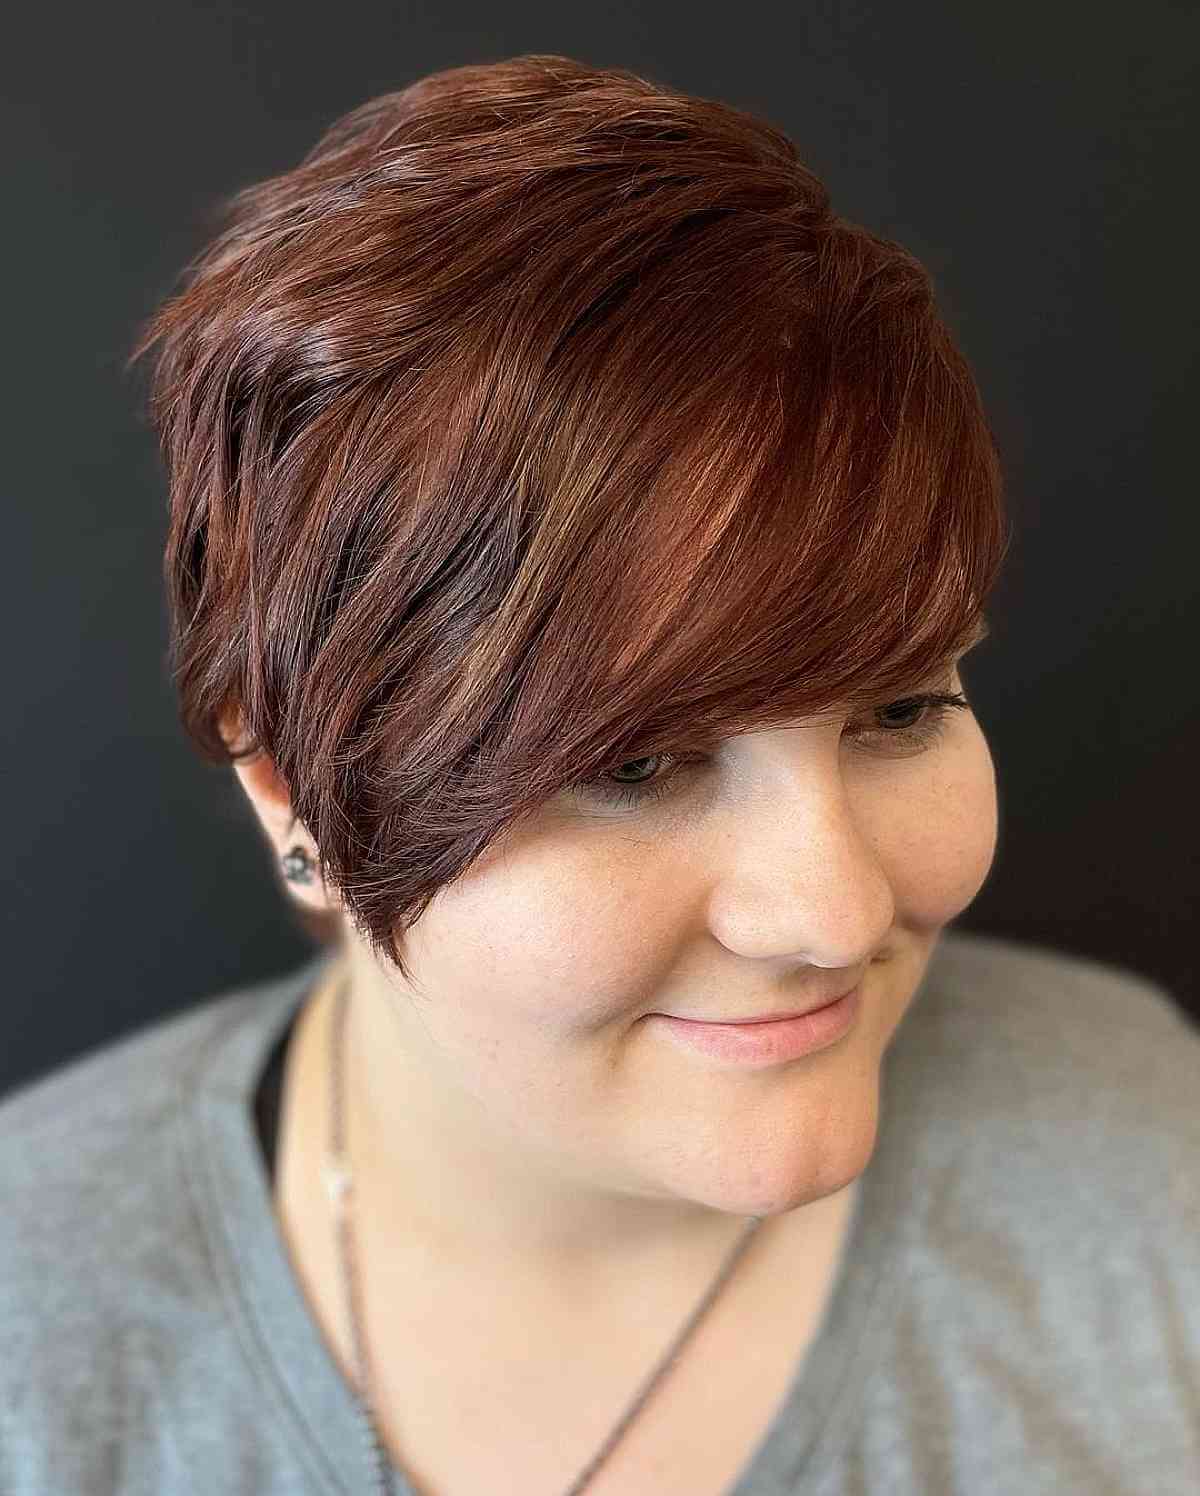 Auburn Pixie Cut with a Fringe for Short Hair